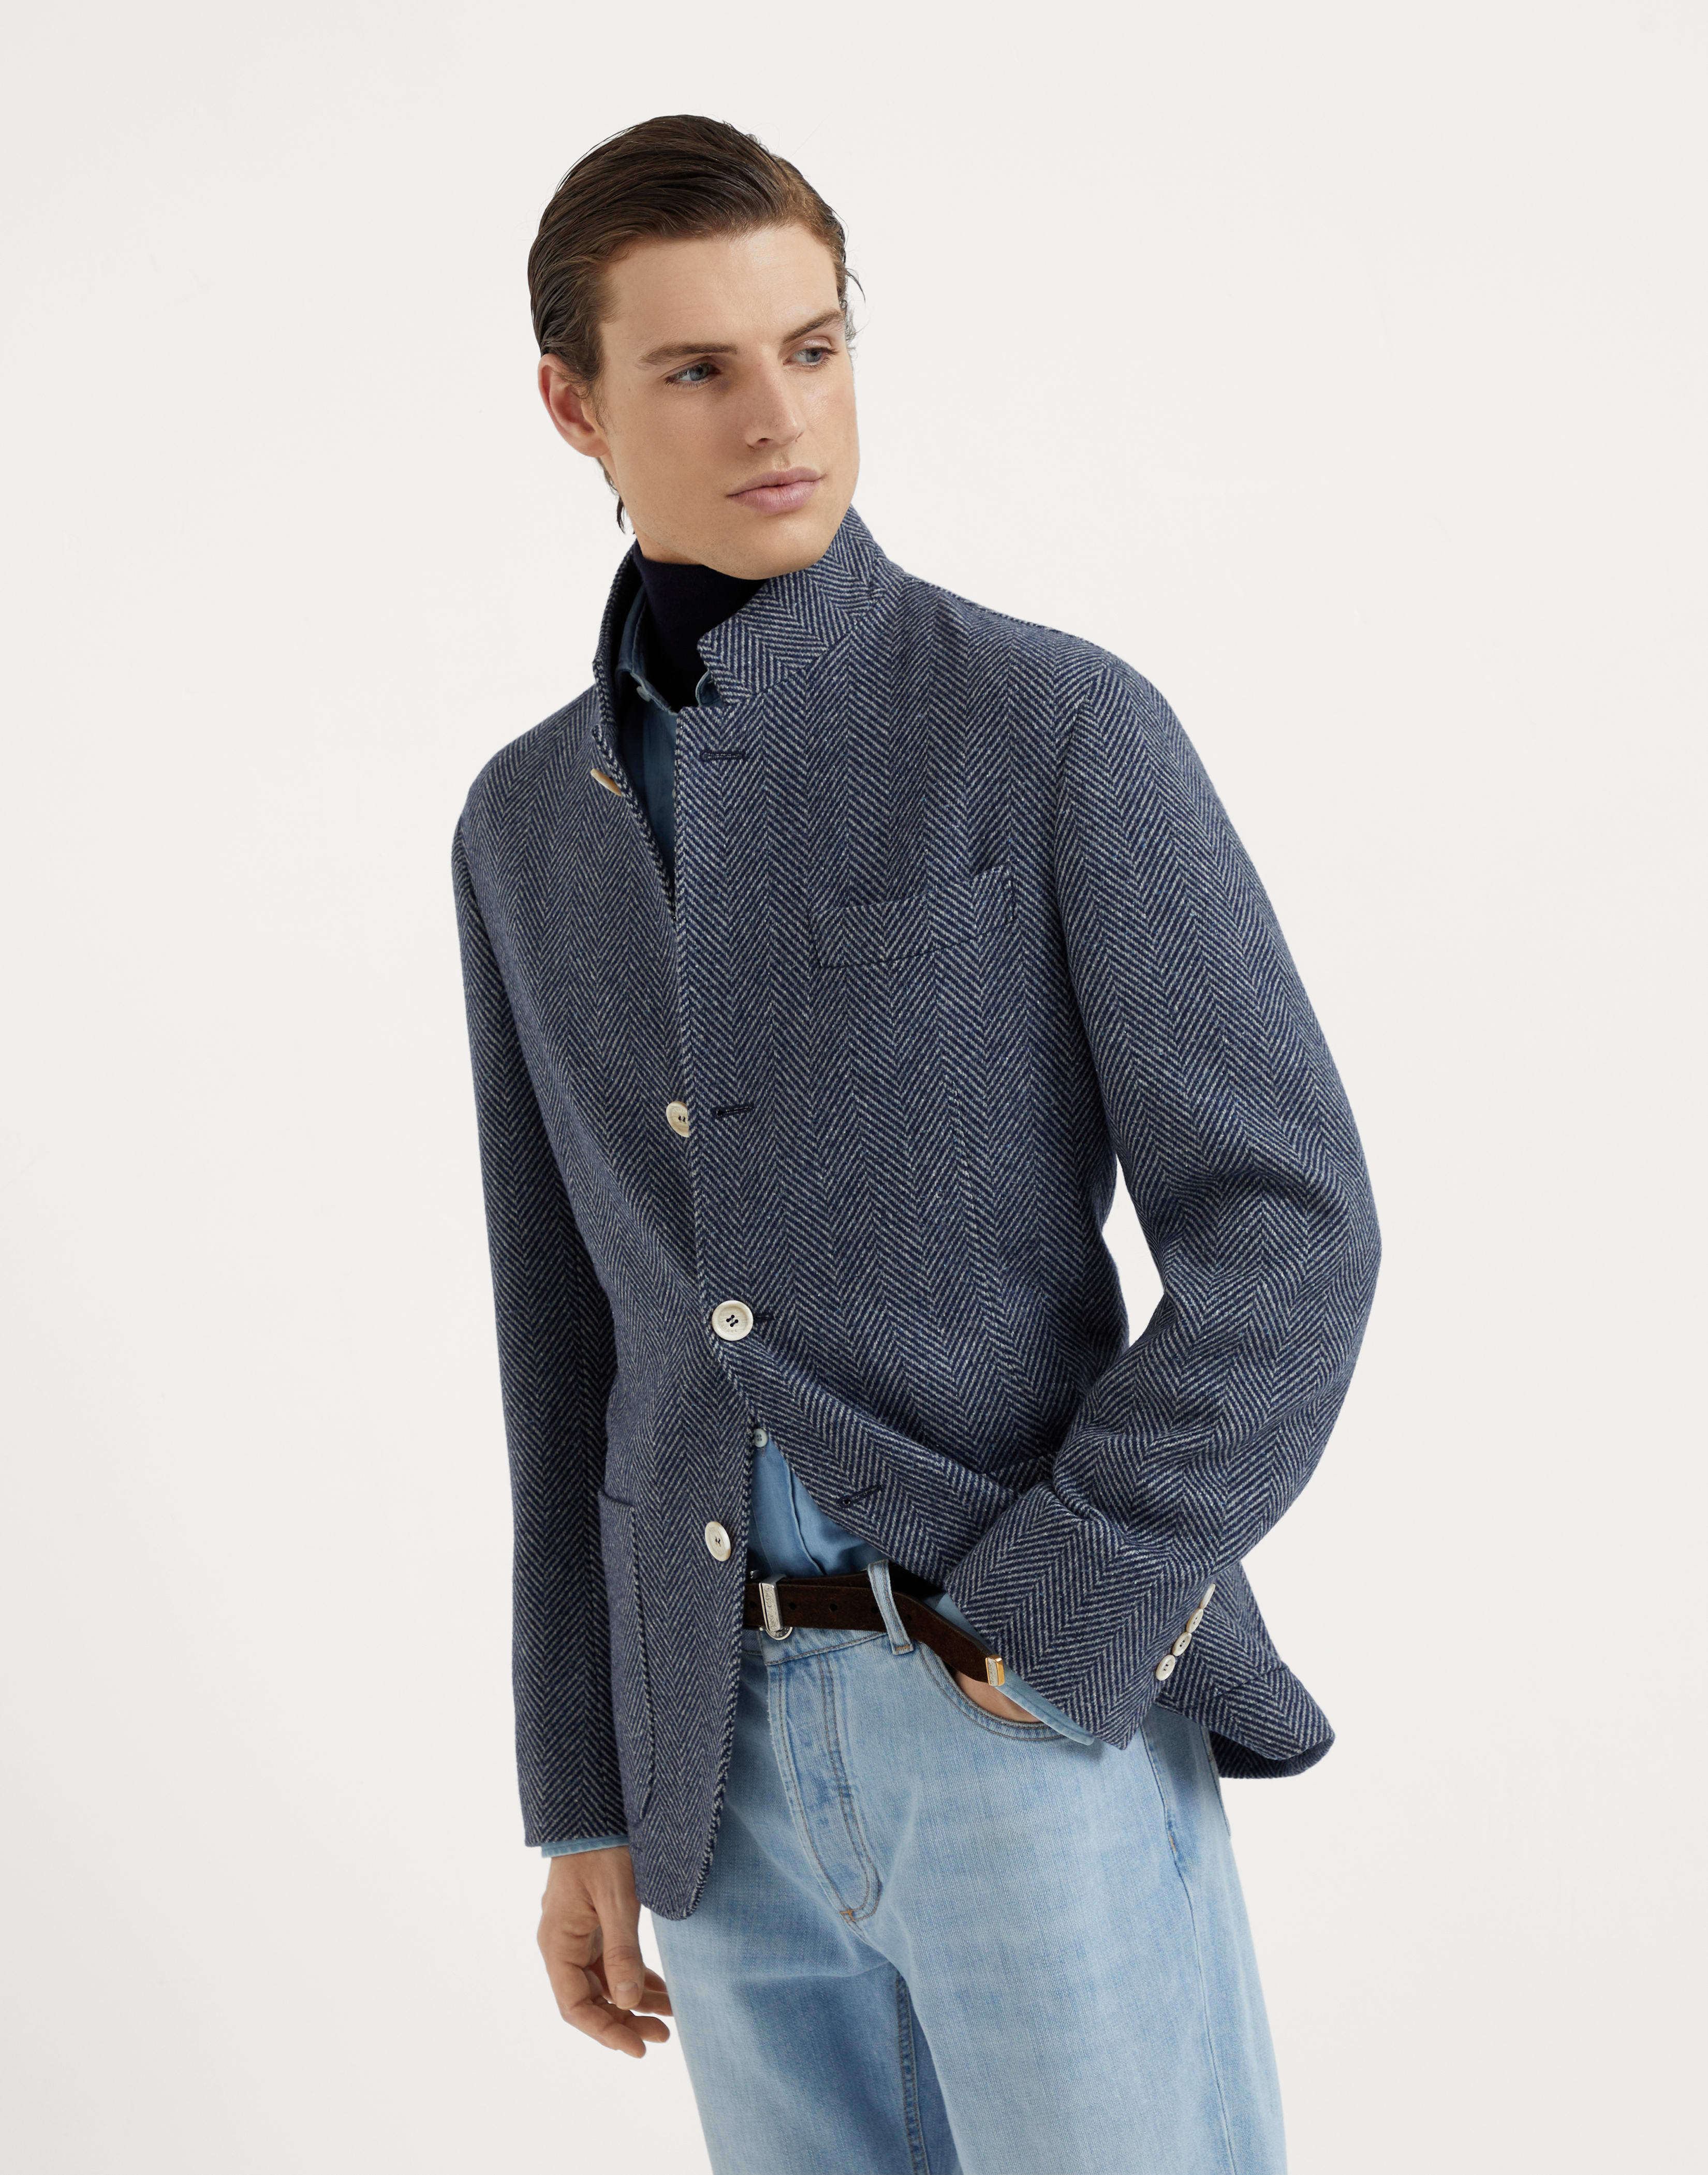 Куртка-пиджак - Вид спереди